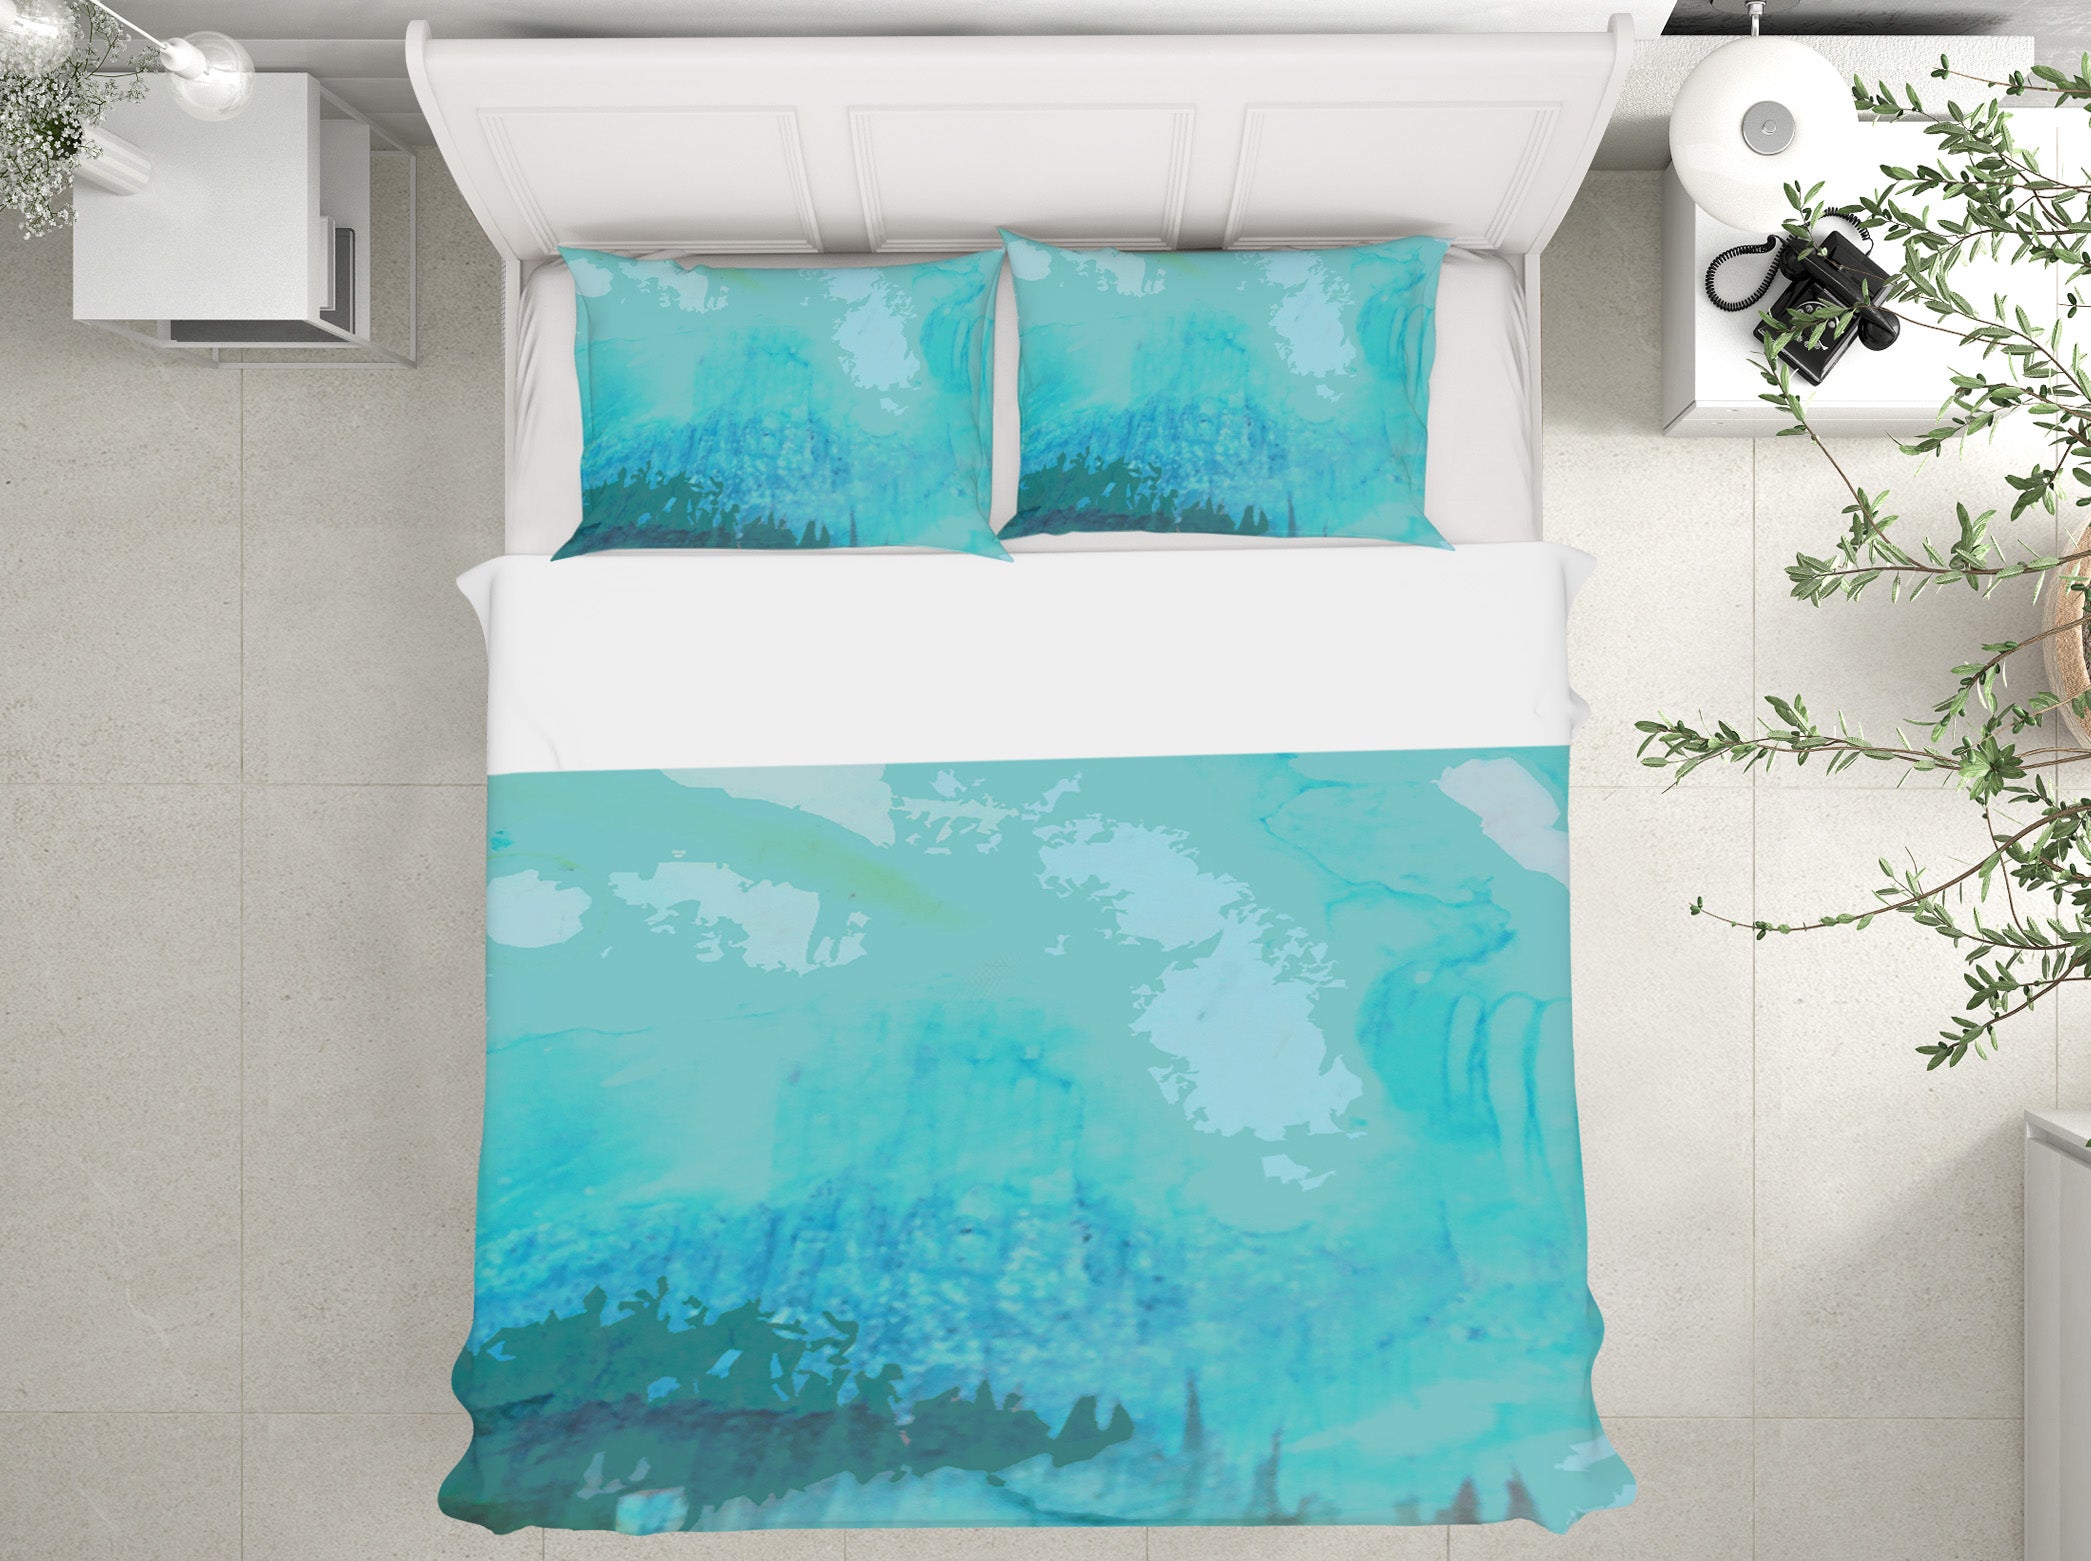 3D Blue Calm 70185 Shandra Smith Bedding Bed Pillowcases Quilt